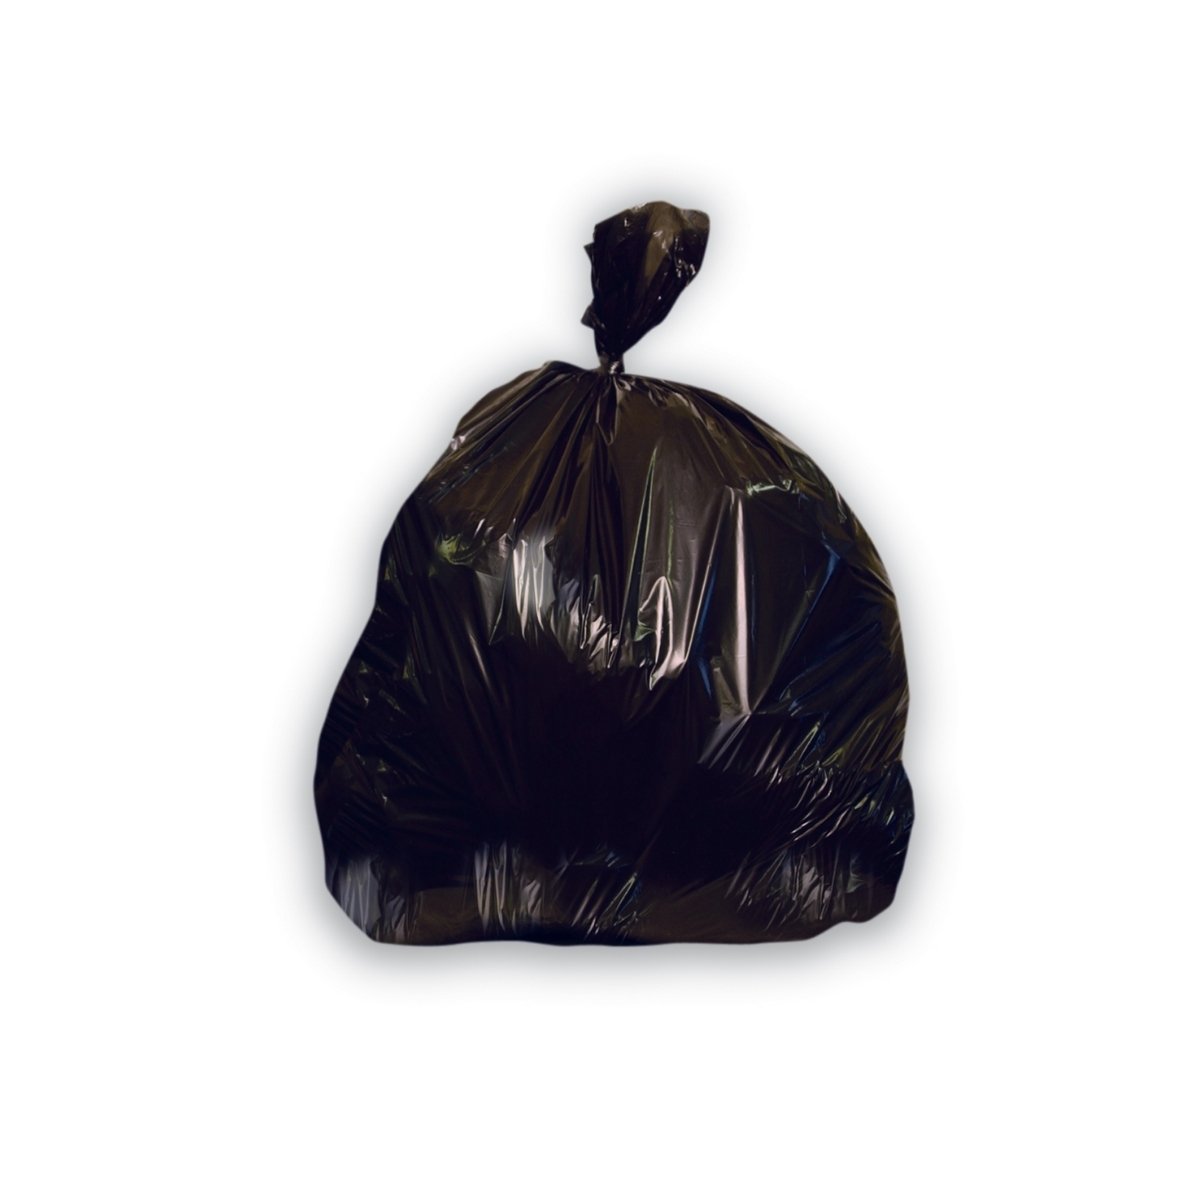  Besli 8 Gallon Black Drawstring Trash Bag Garbage Bag Trash Can  Liner,0.9 Mil,90 Counts : Health & Household